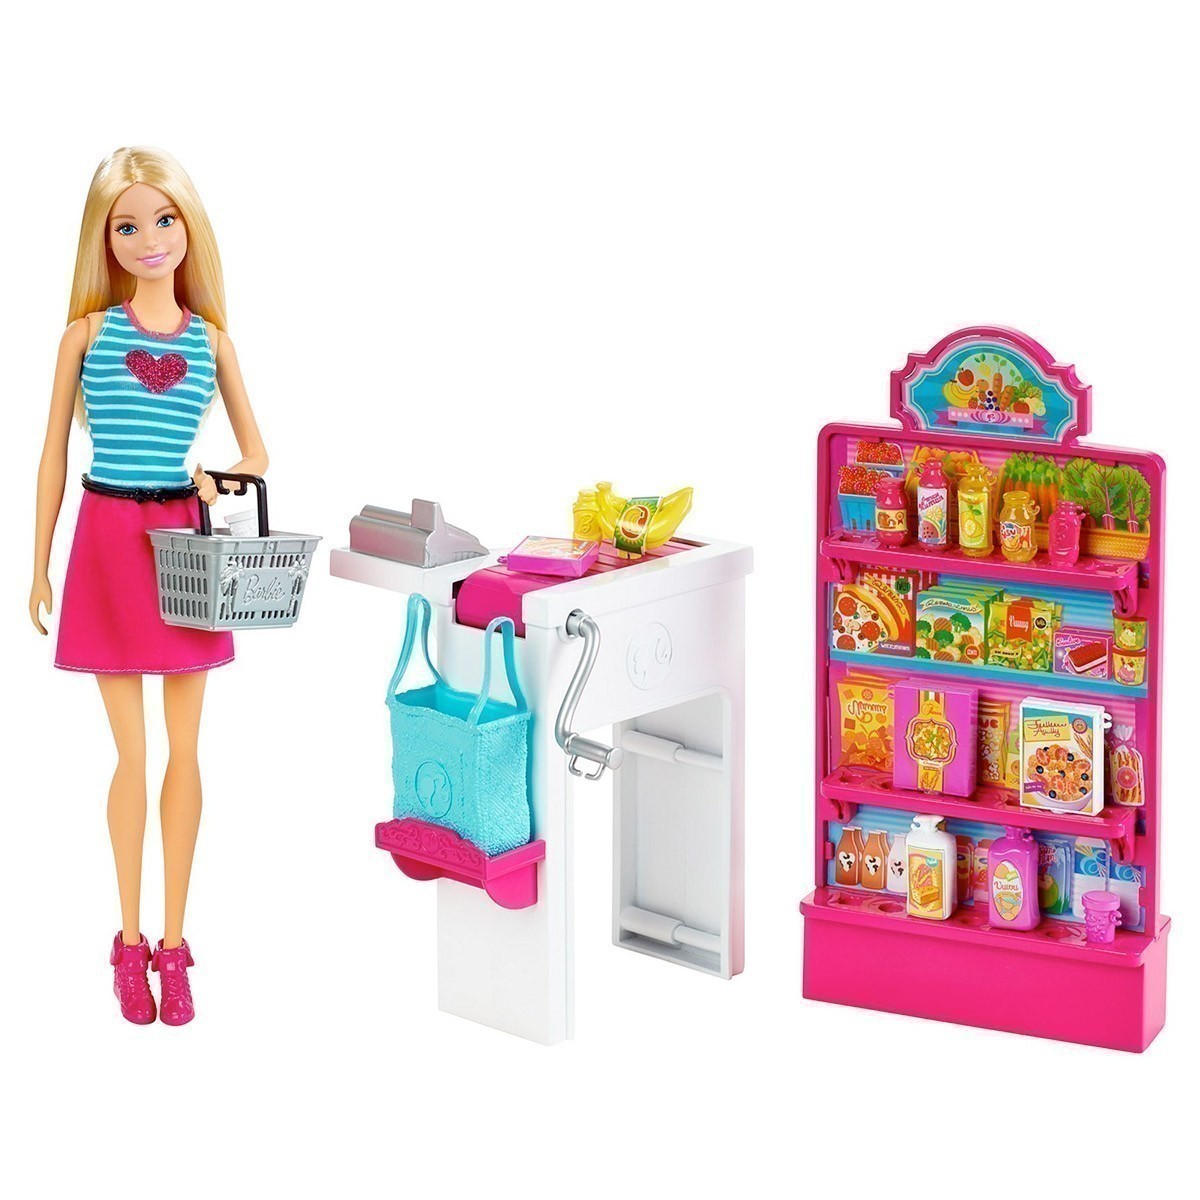 Barbie - Market Play-set